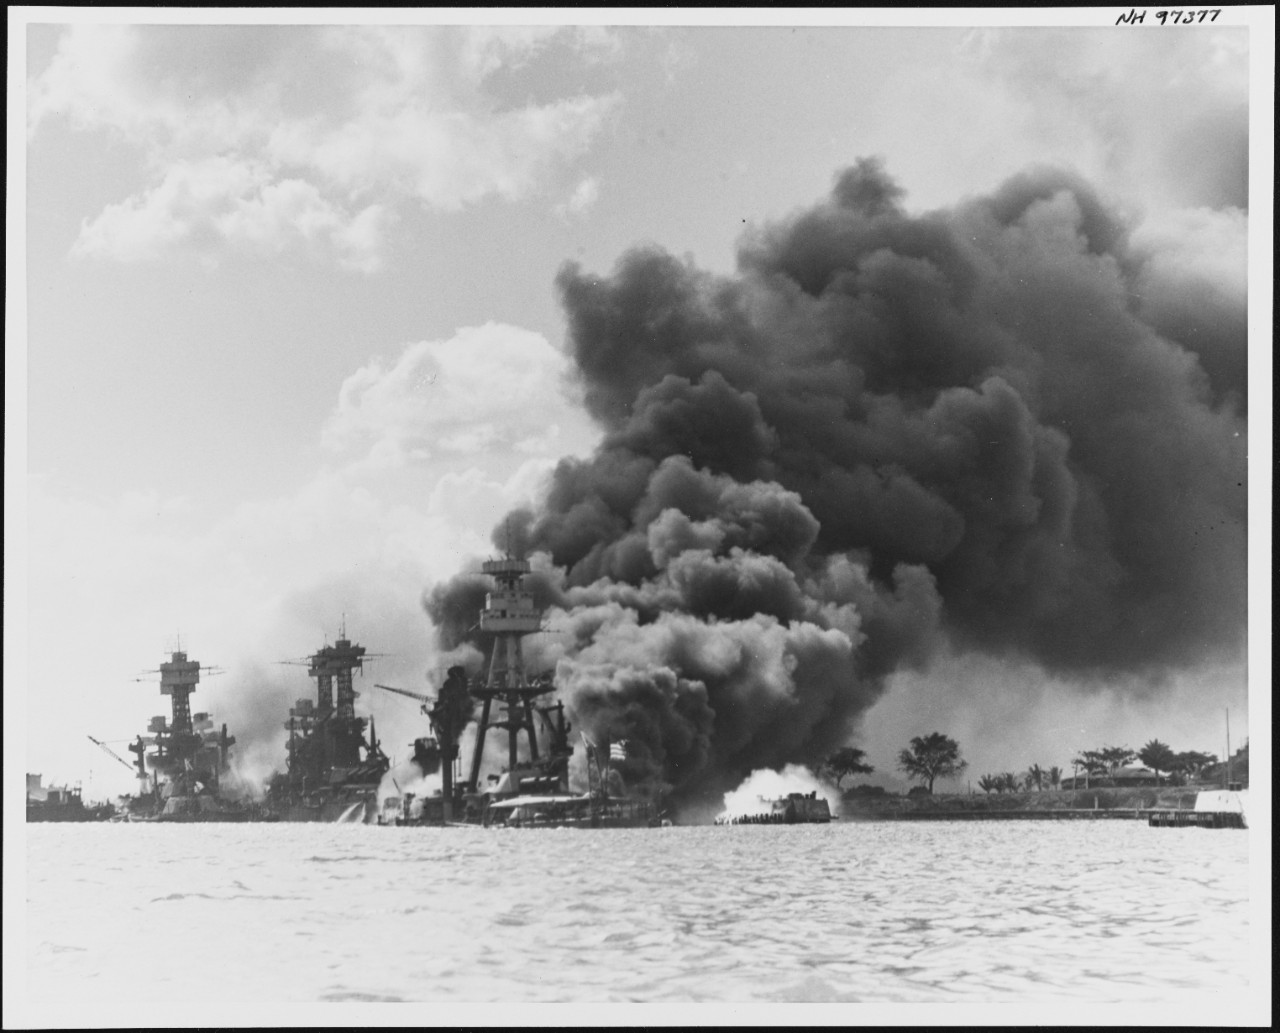 Photo #: NH 97377  Pearl Harbor Attack, 7 December 1941